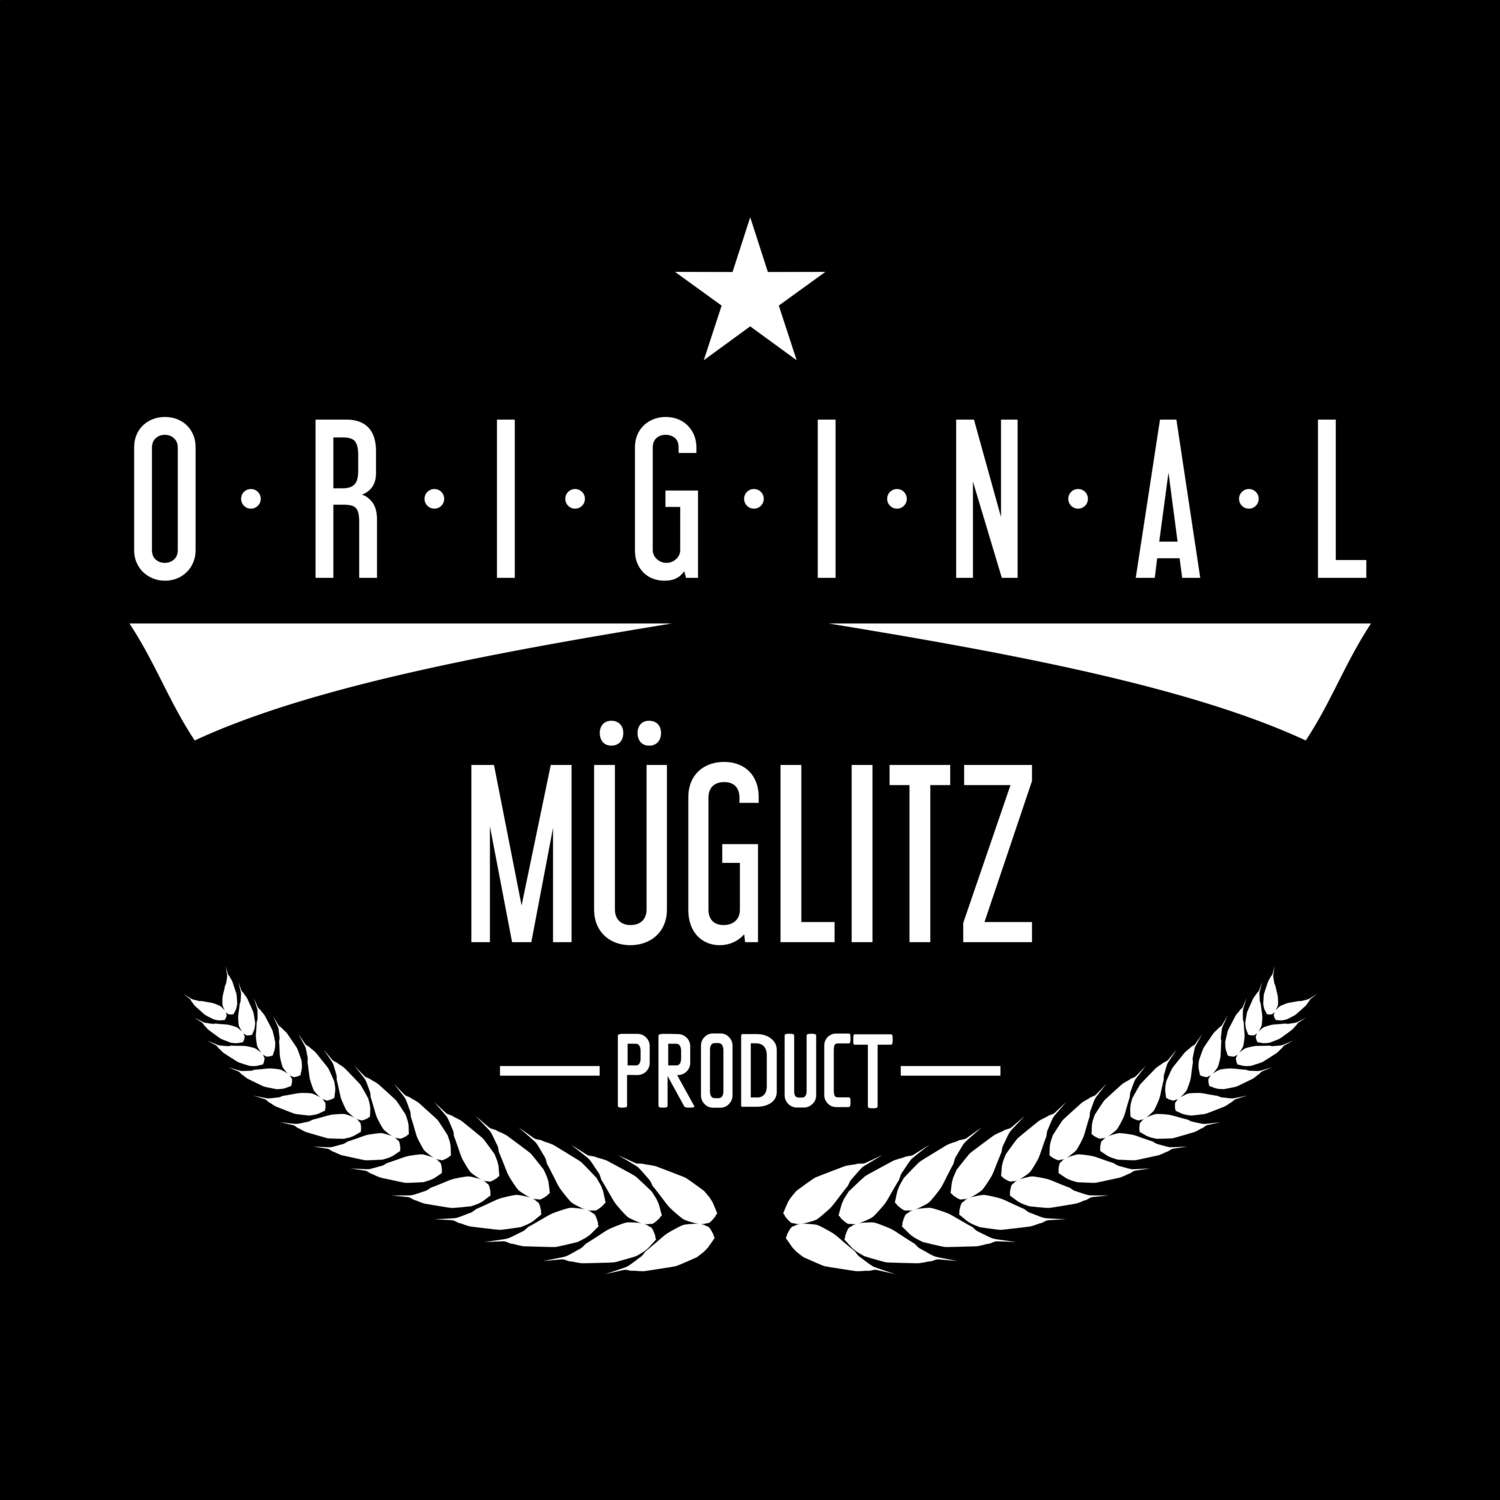 Müglitz T-Shirt »Original Product«